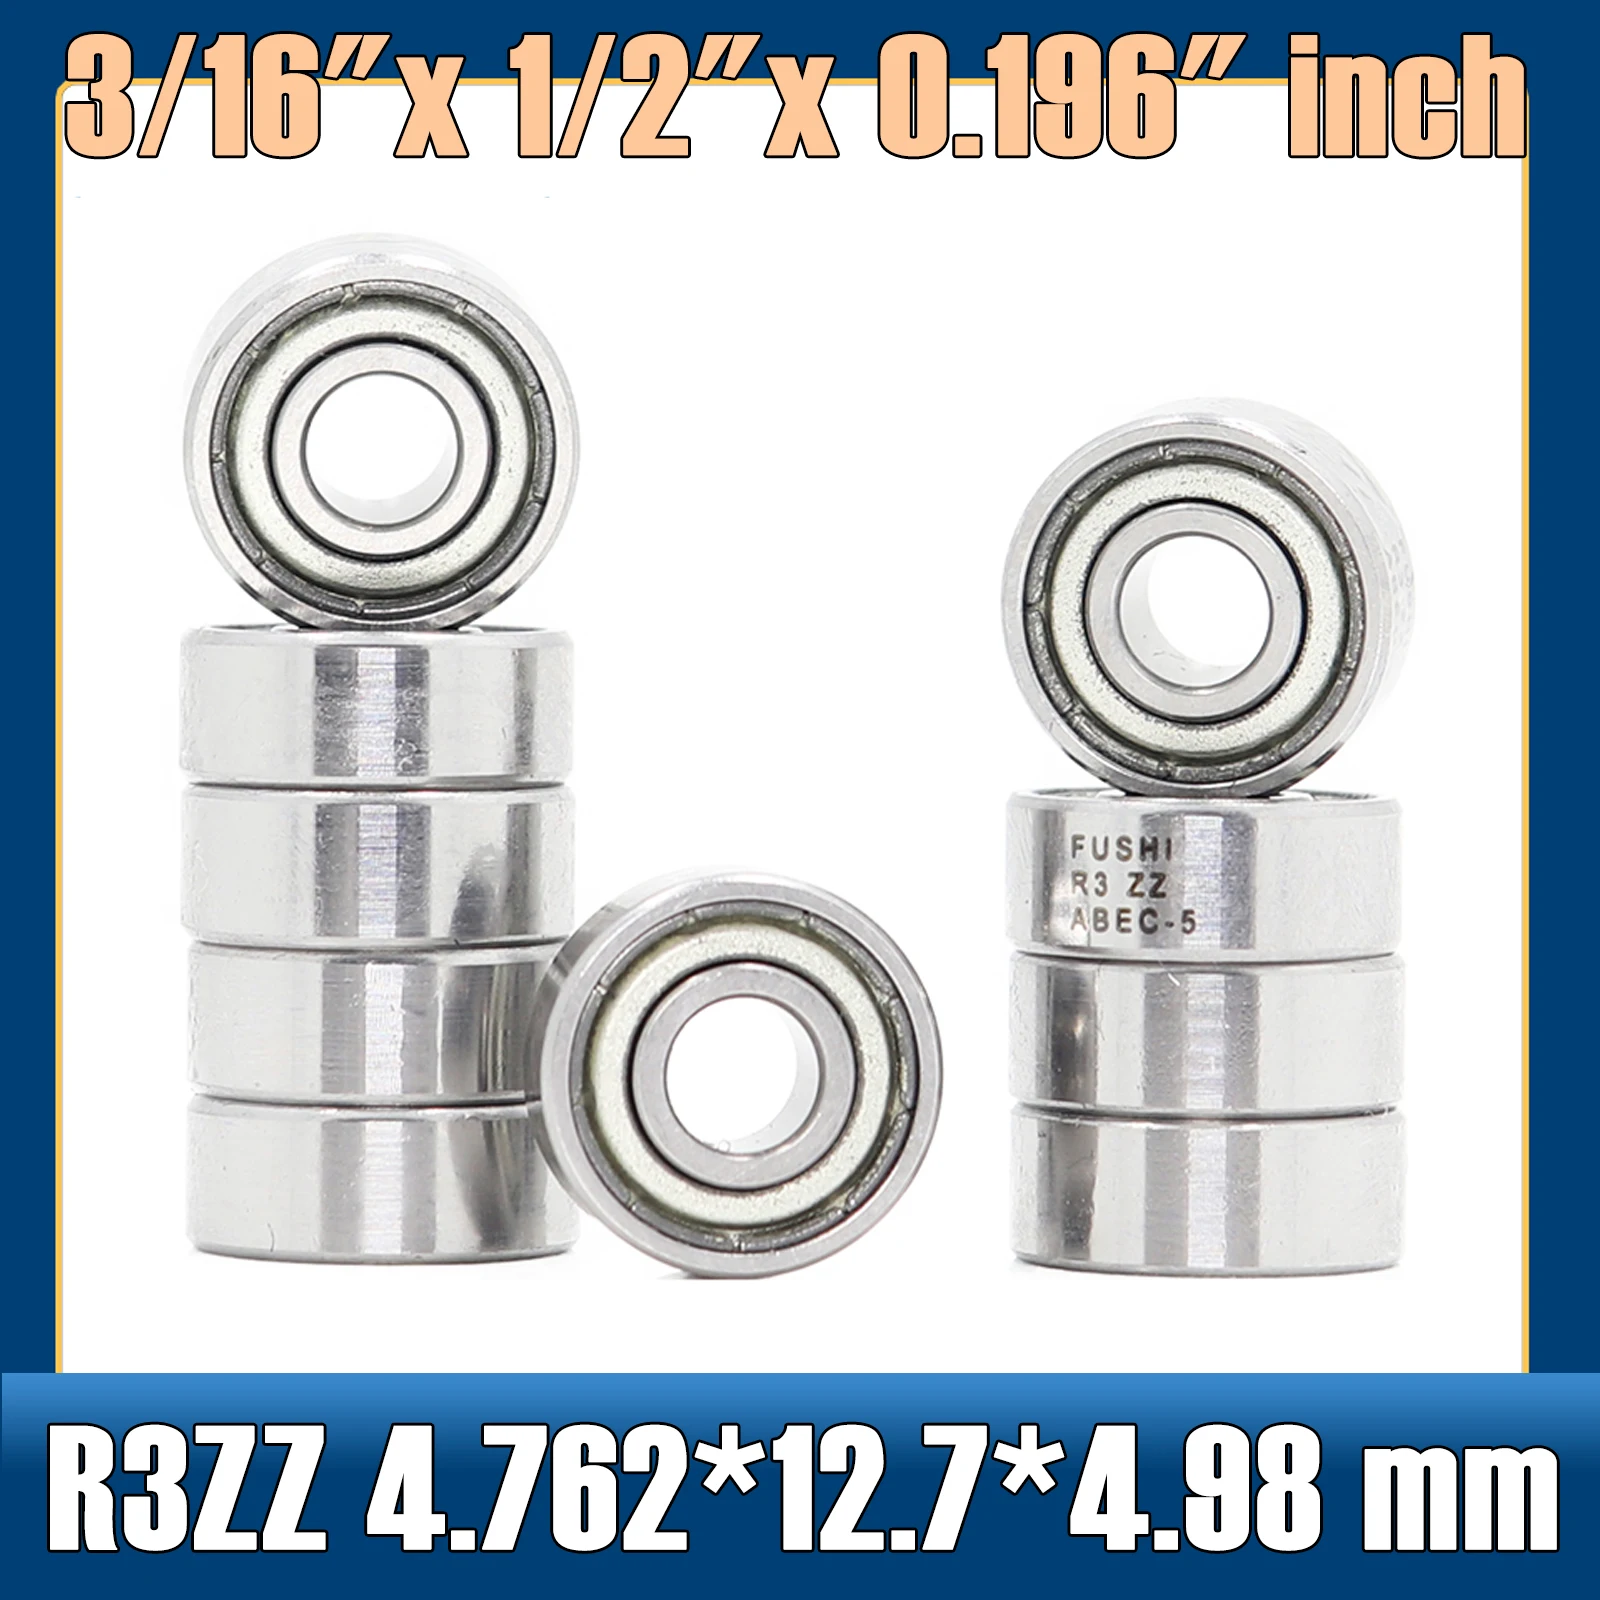 

R3ZZ Bearing ABEC-5 ( 10 PCS ) 3/16"x1/2"x0.196" inch Miniature R3 ZZ Ball Bearings 4.762*12.7*4.98 mm R3Z For RC Models